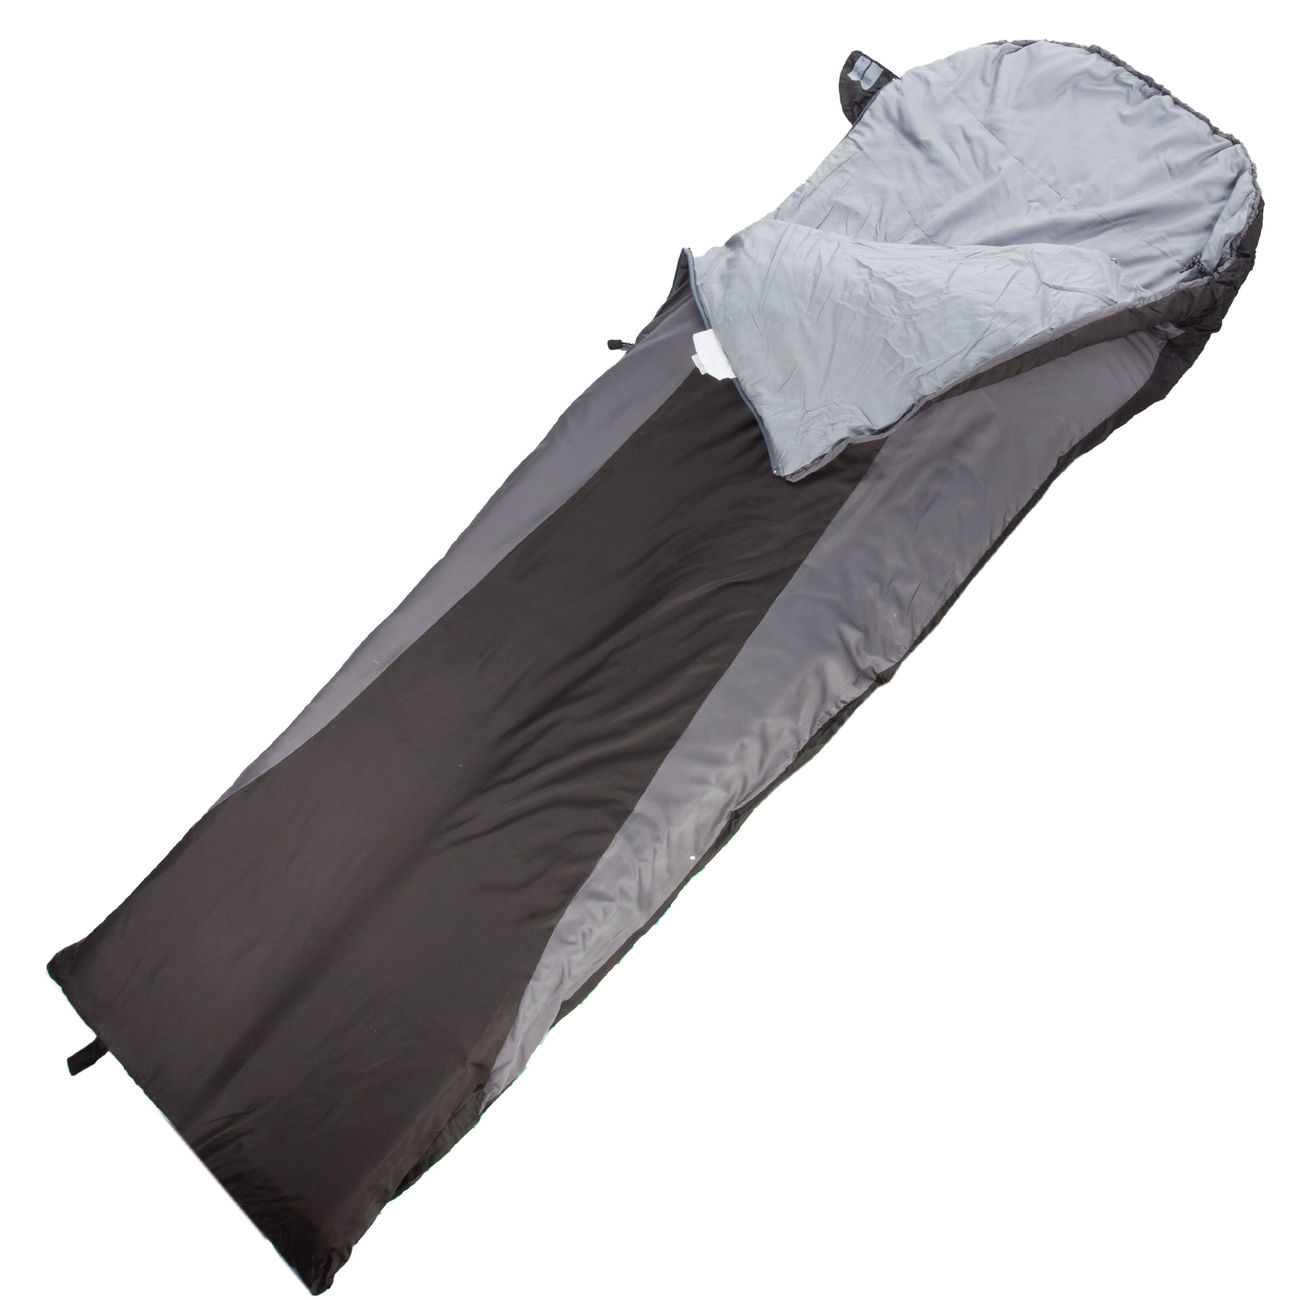 Fox Outdoor Schlafsack Ultralight schwarz/grau Bild 1